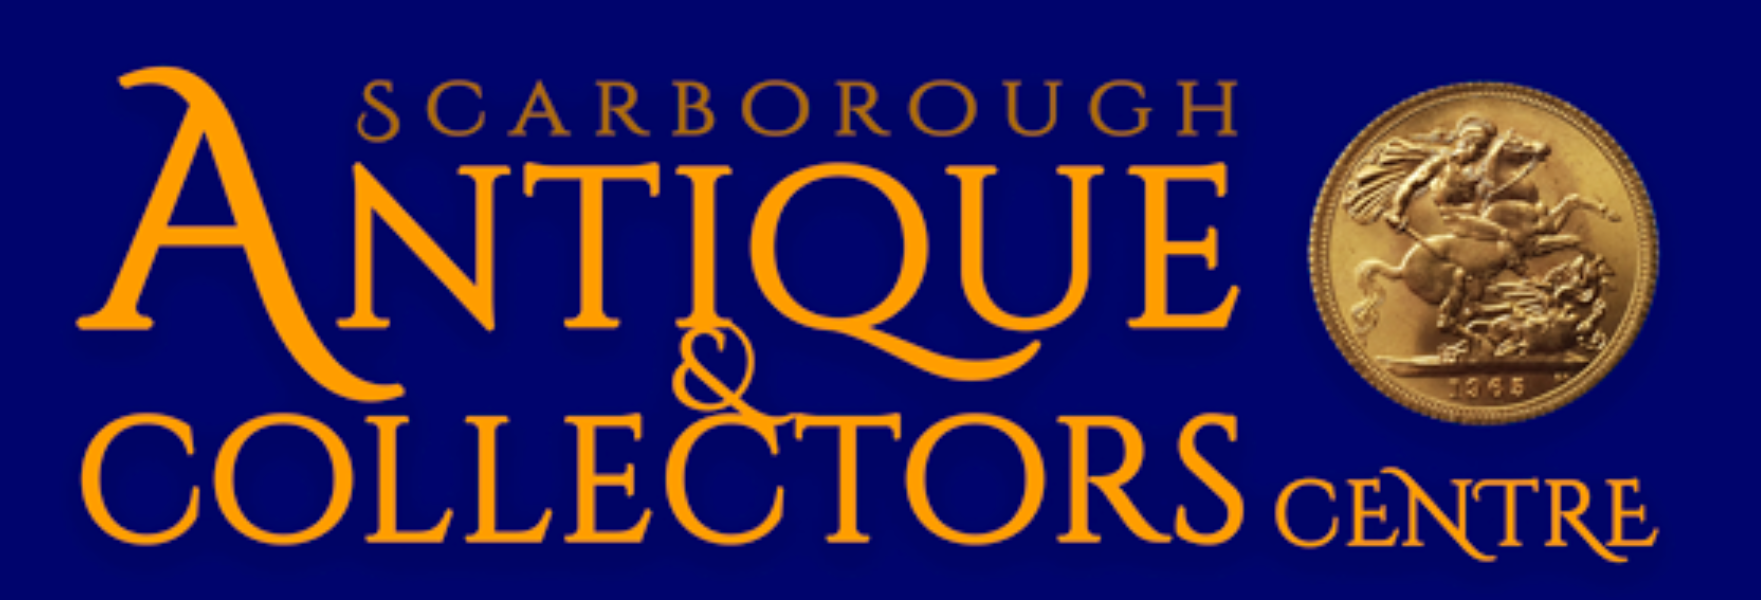 Antiques and Collectors Centre Scarborough